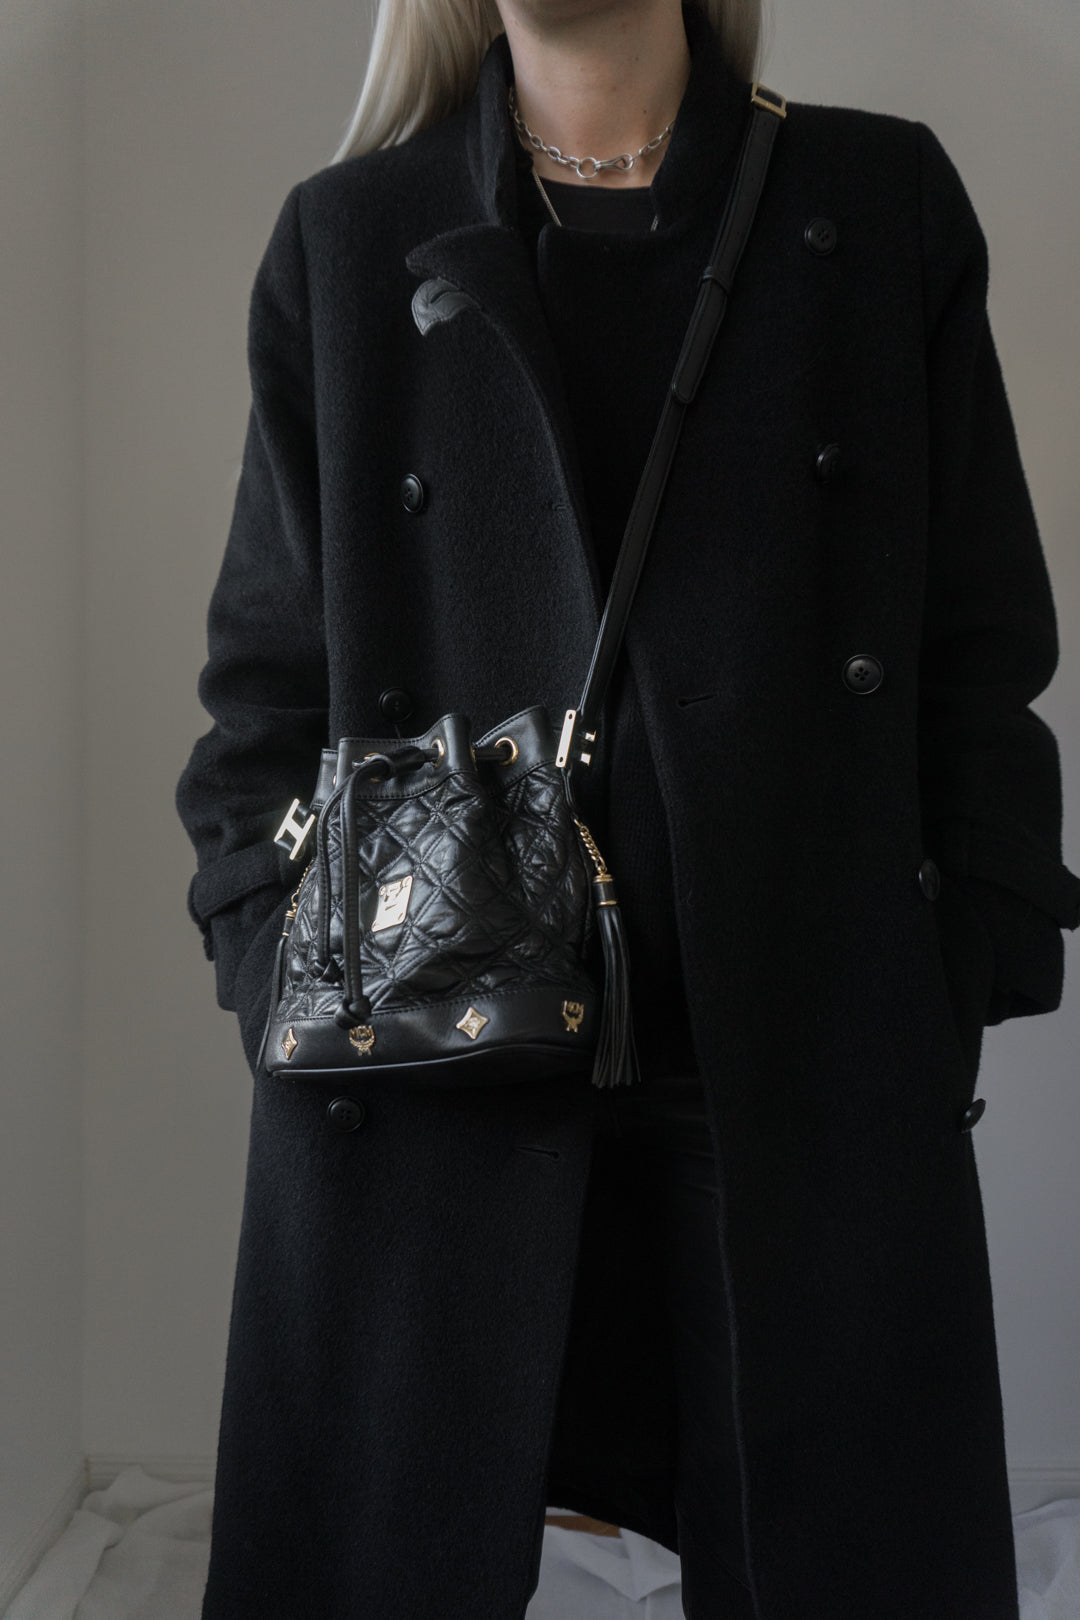 MCM leather bag pouch black